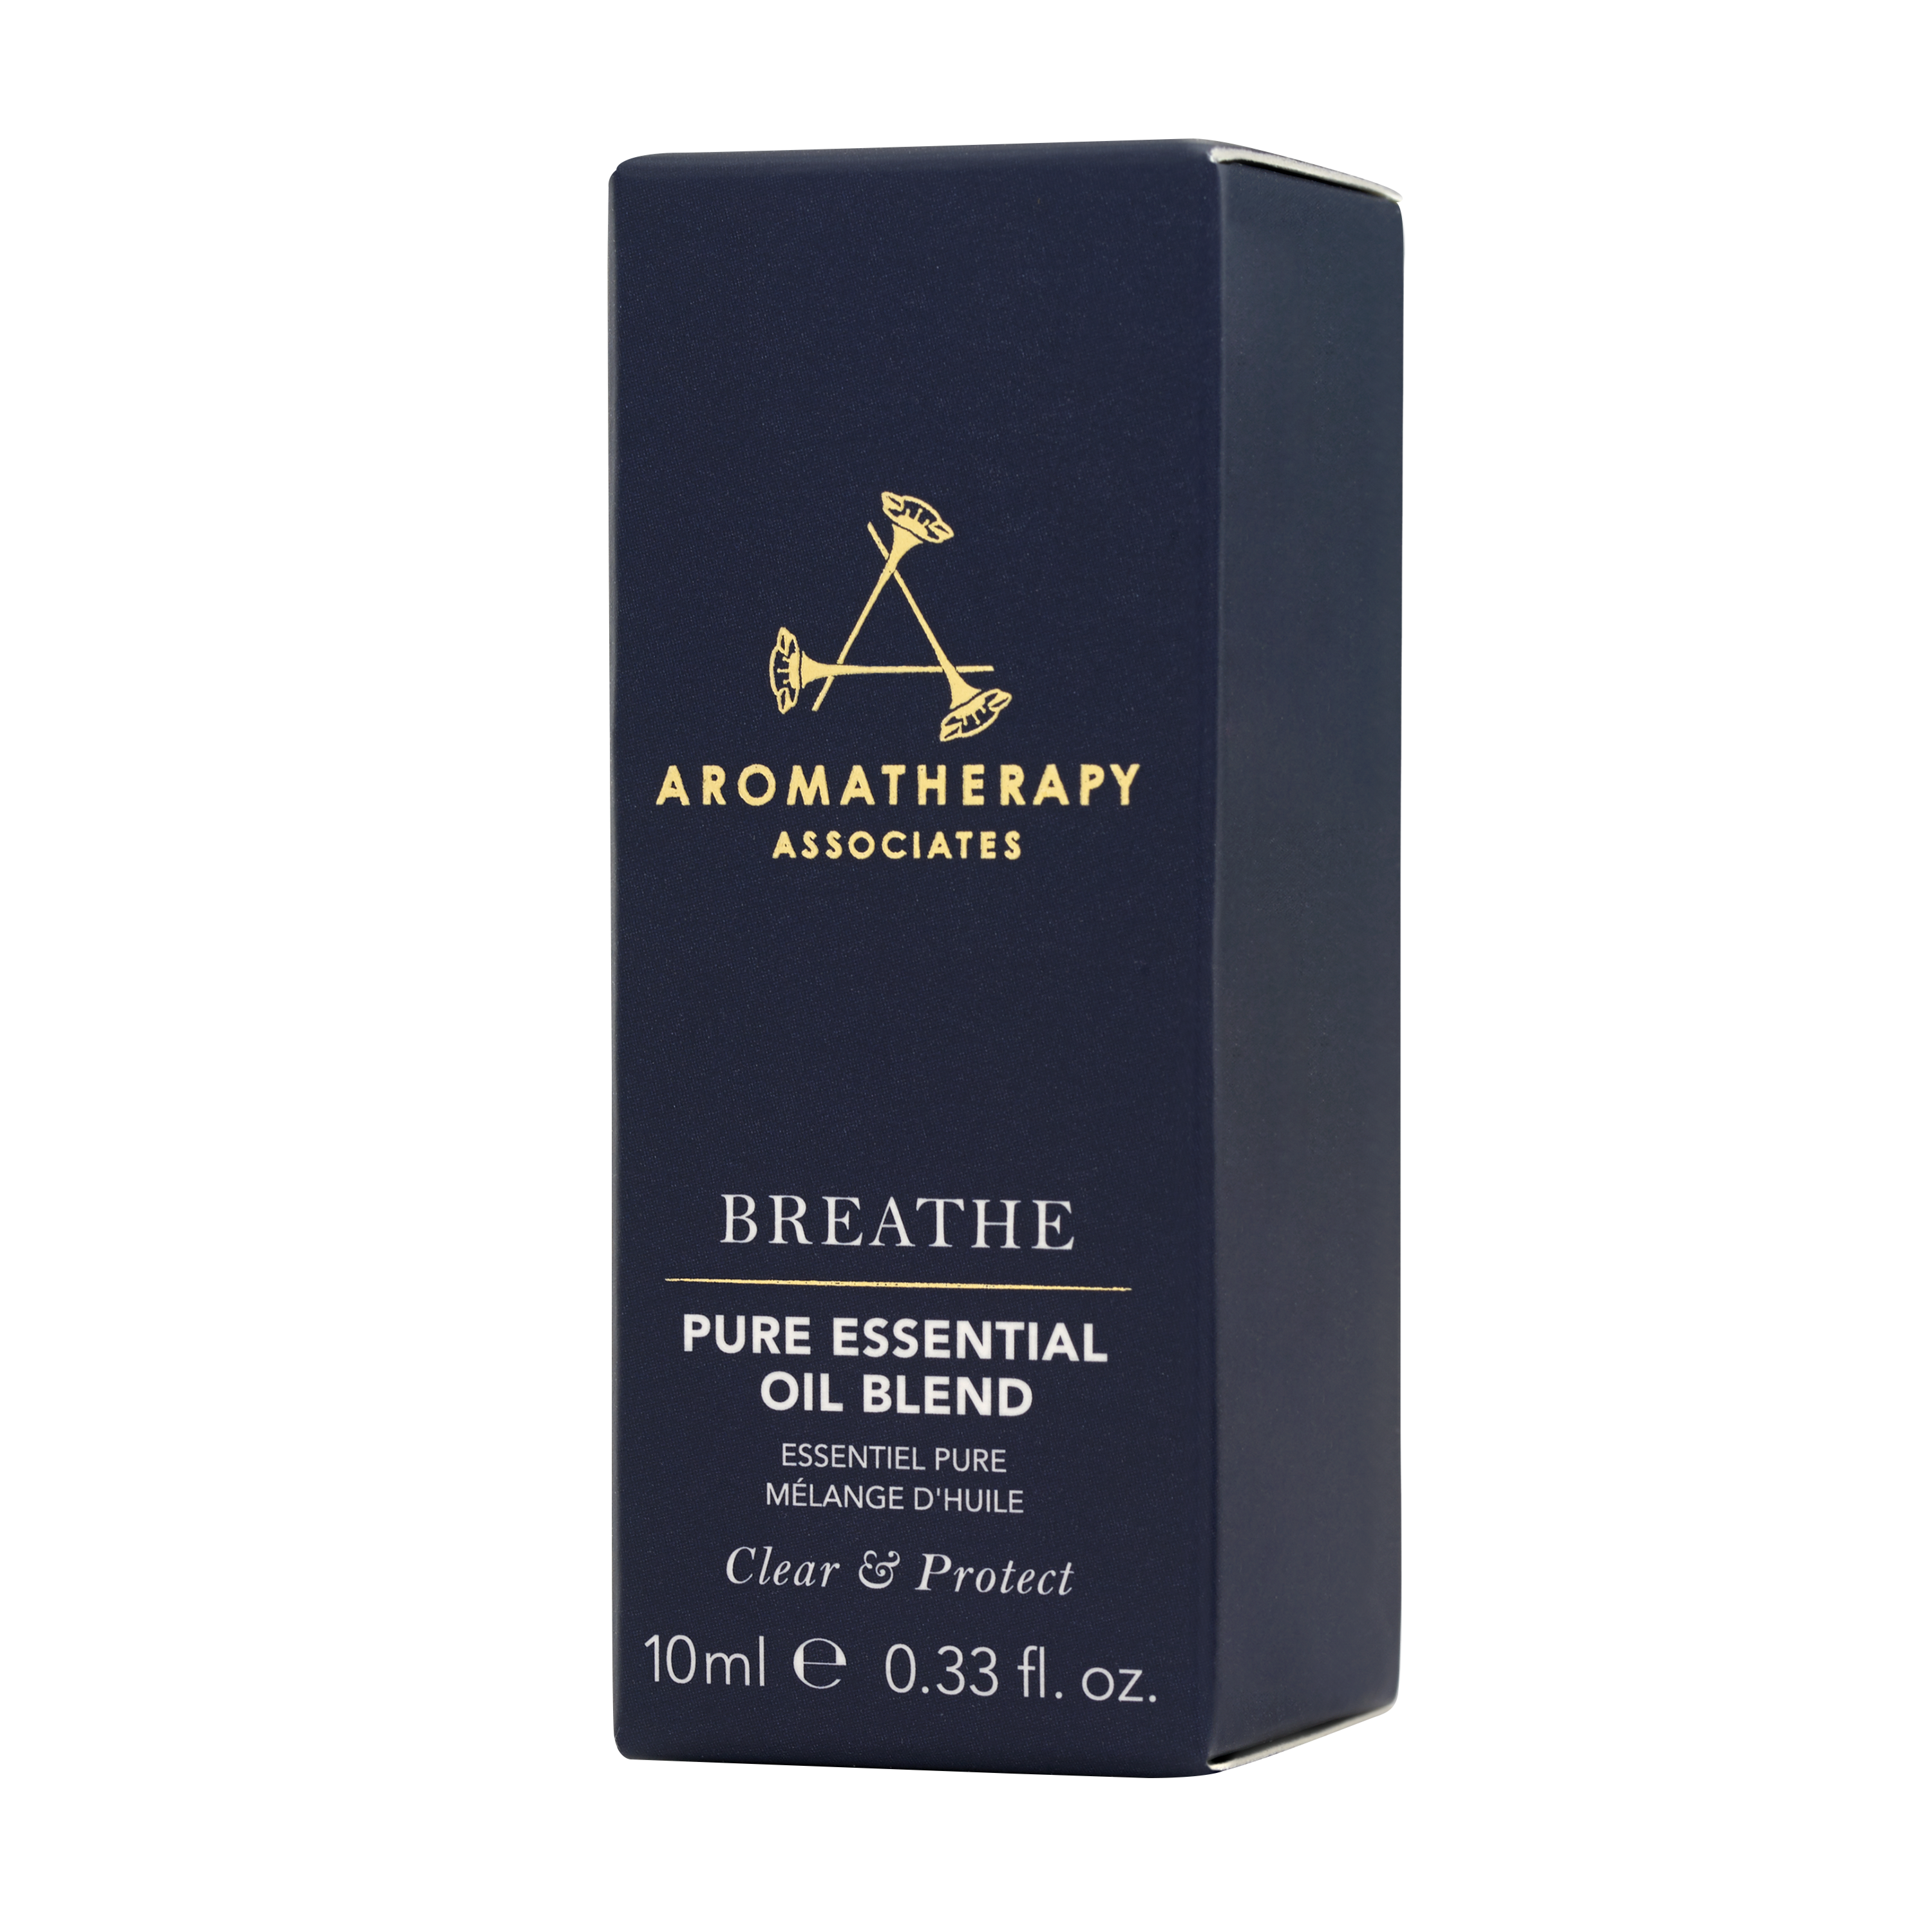 Breathe Pure Essential Oil Blend Aromatherapy Associates